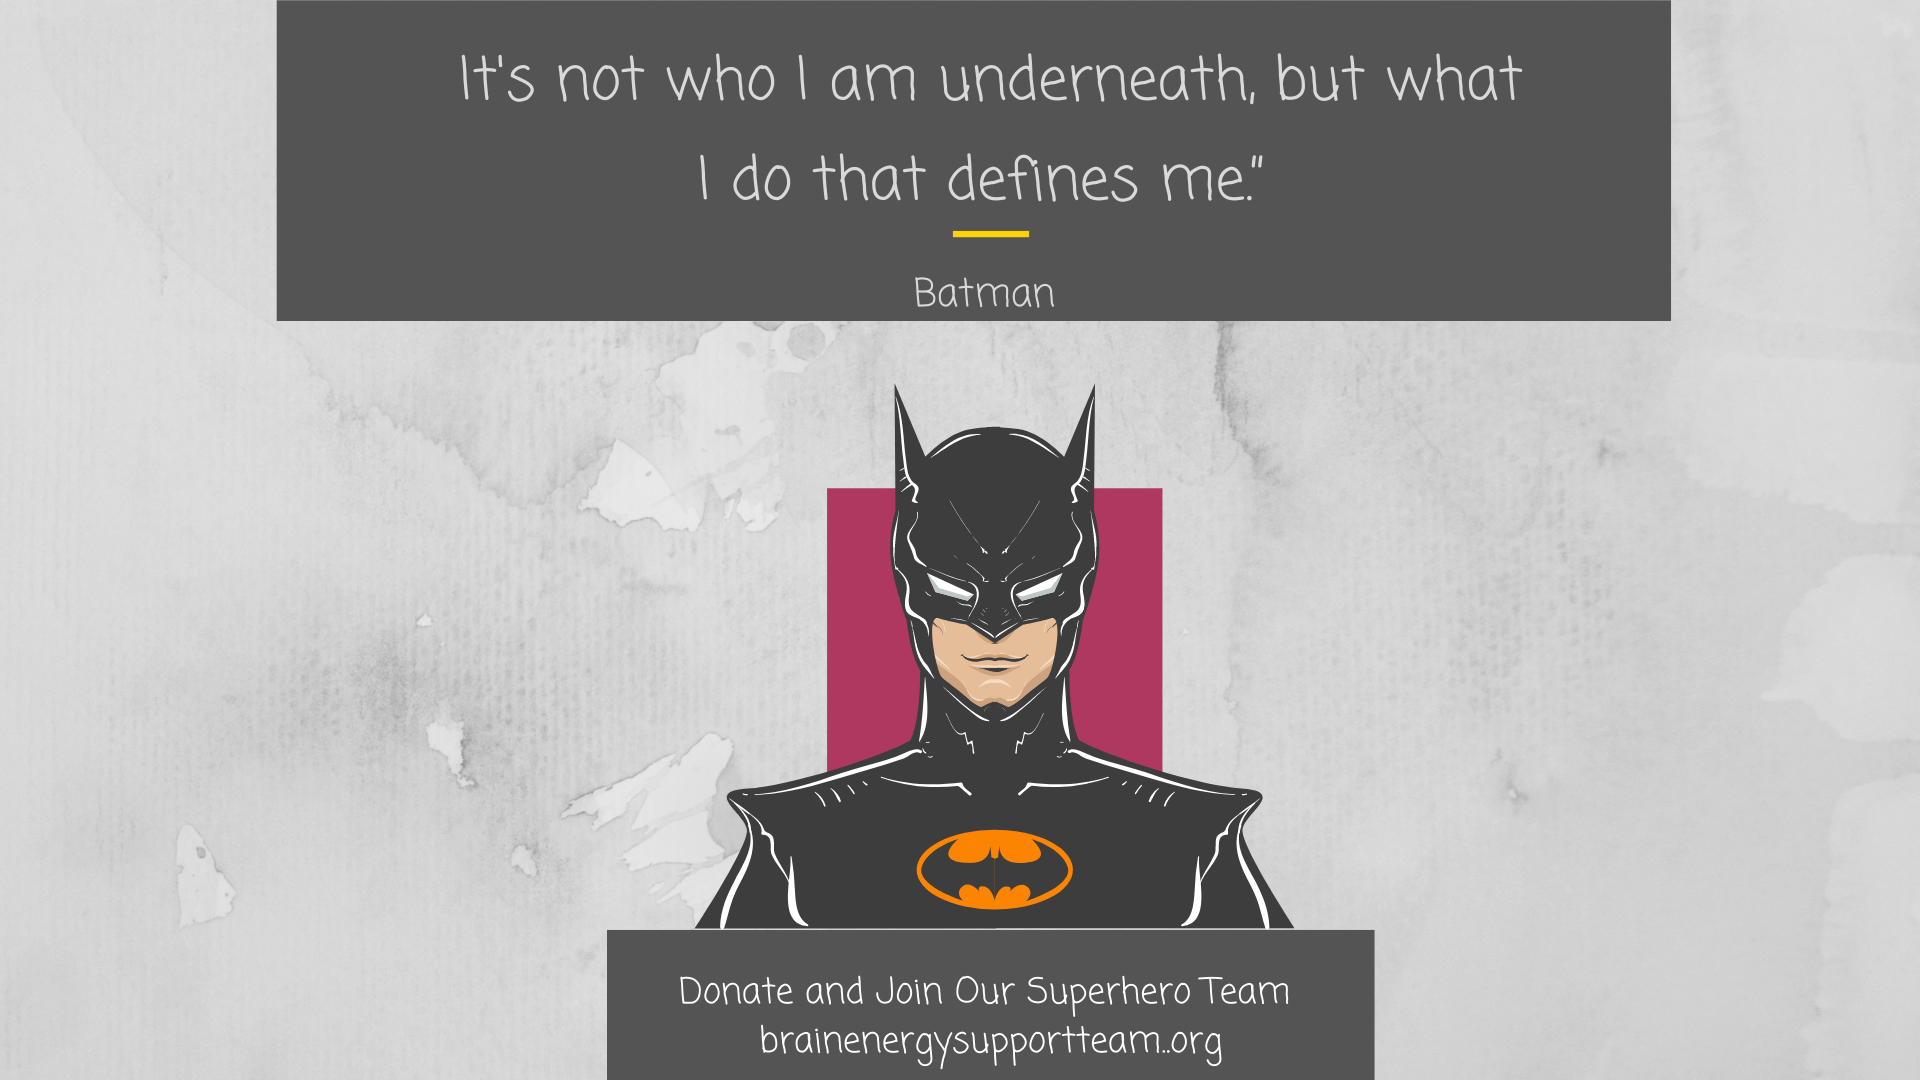 Batman Says: What We Do Defines Us